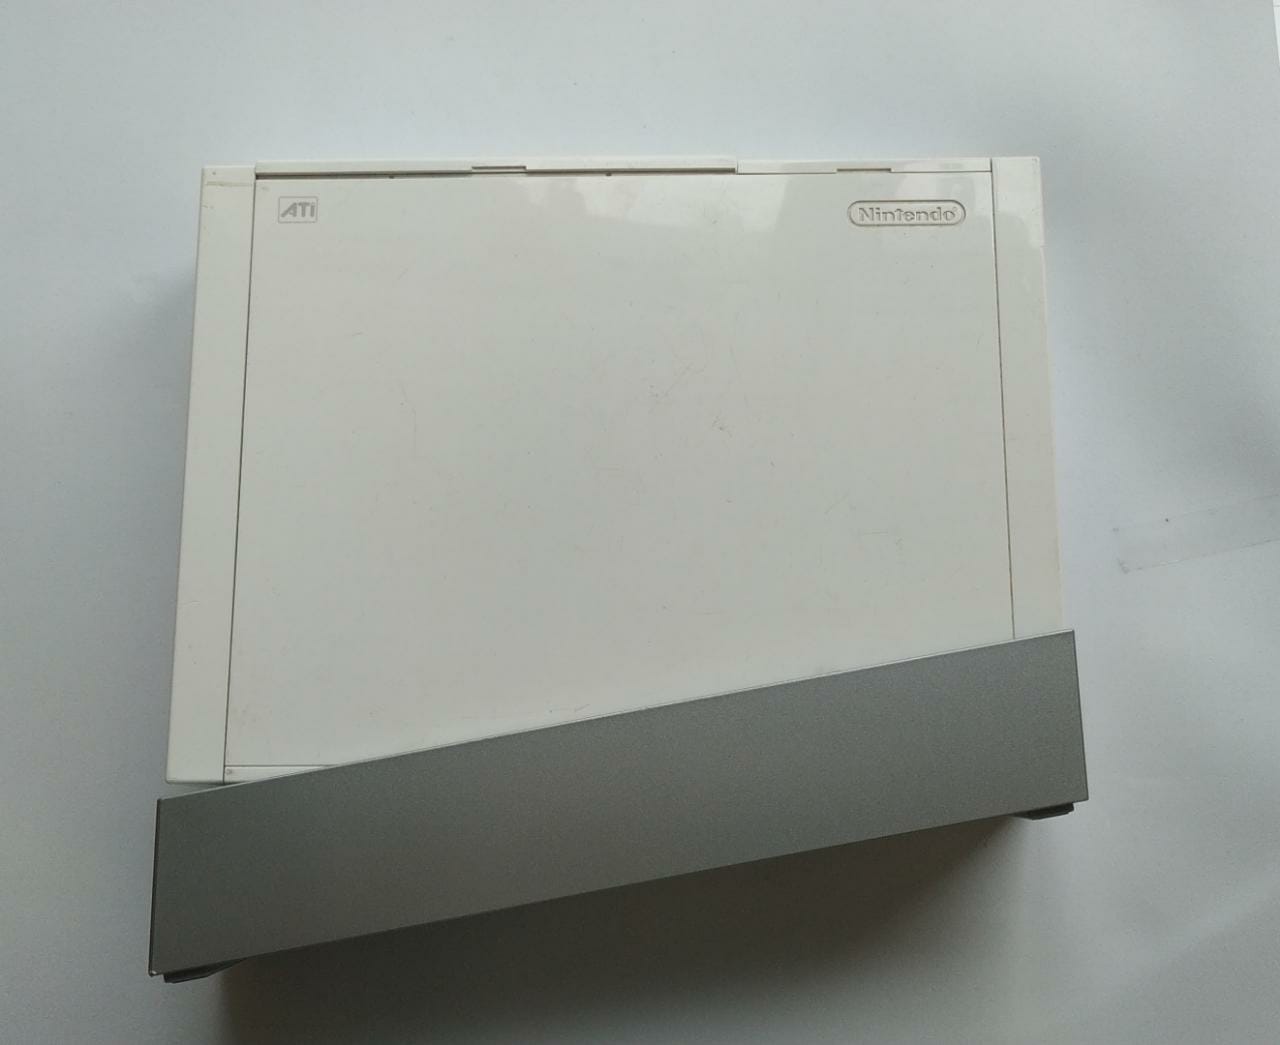 Console Nintendo Wii Branco - Completo - Usado